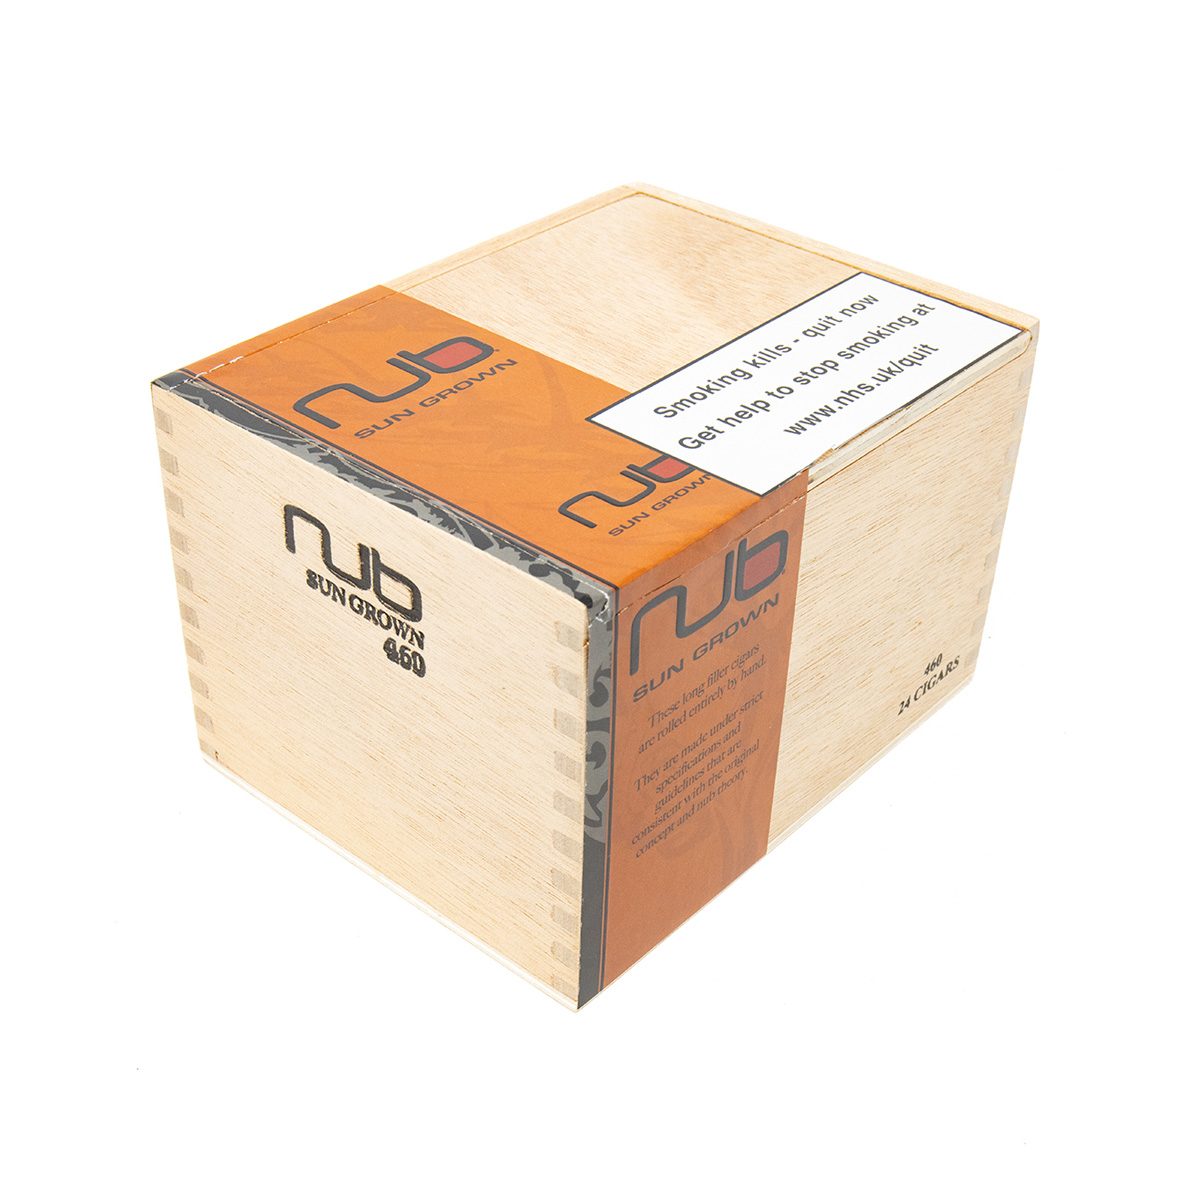 Studio Tobac - Nicaragua - Nub Sungrown 460 (Made by Oliva Cigars) (Box of 24)